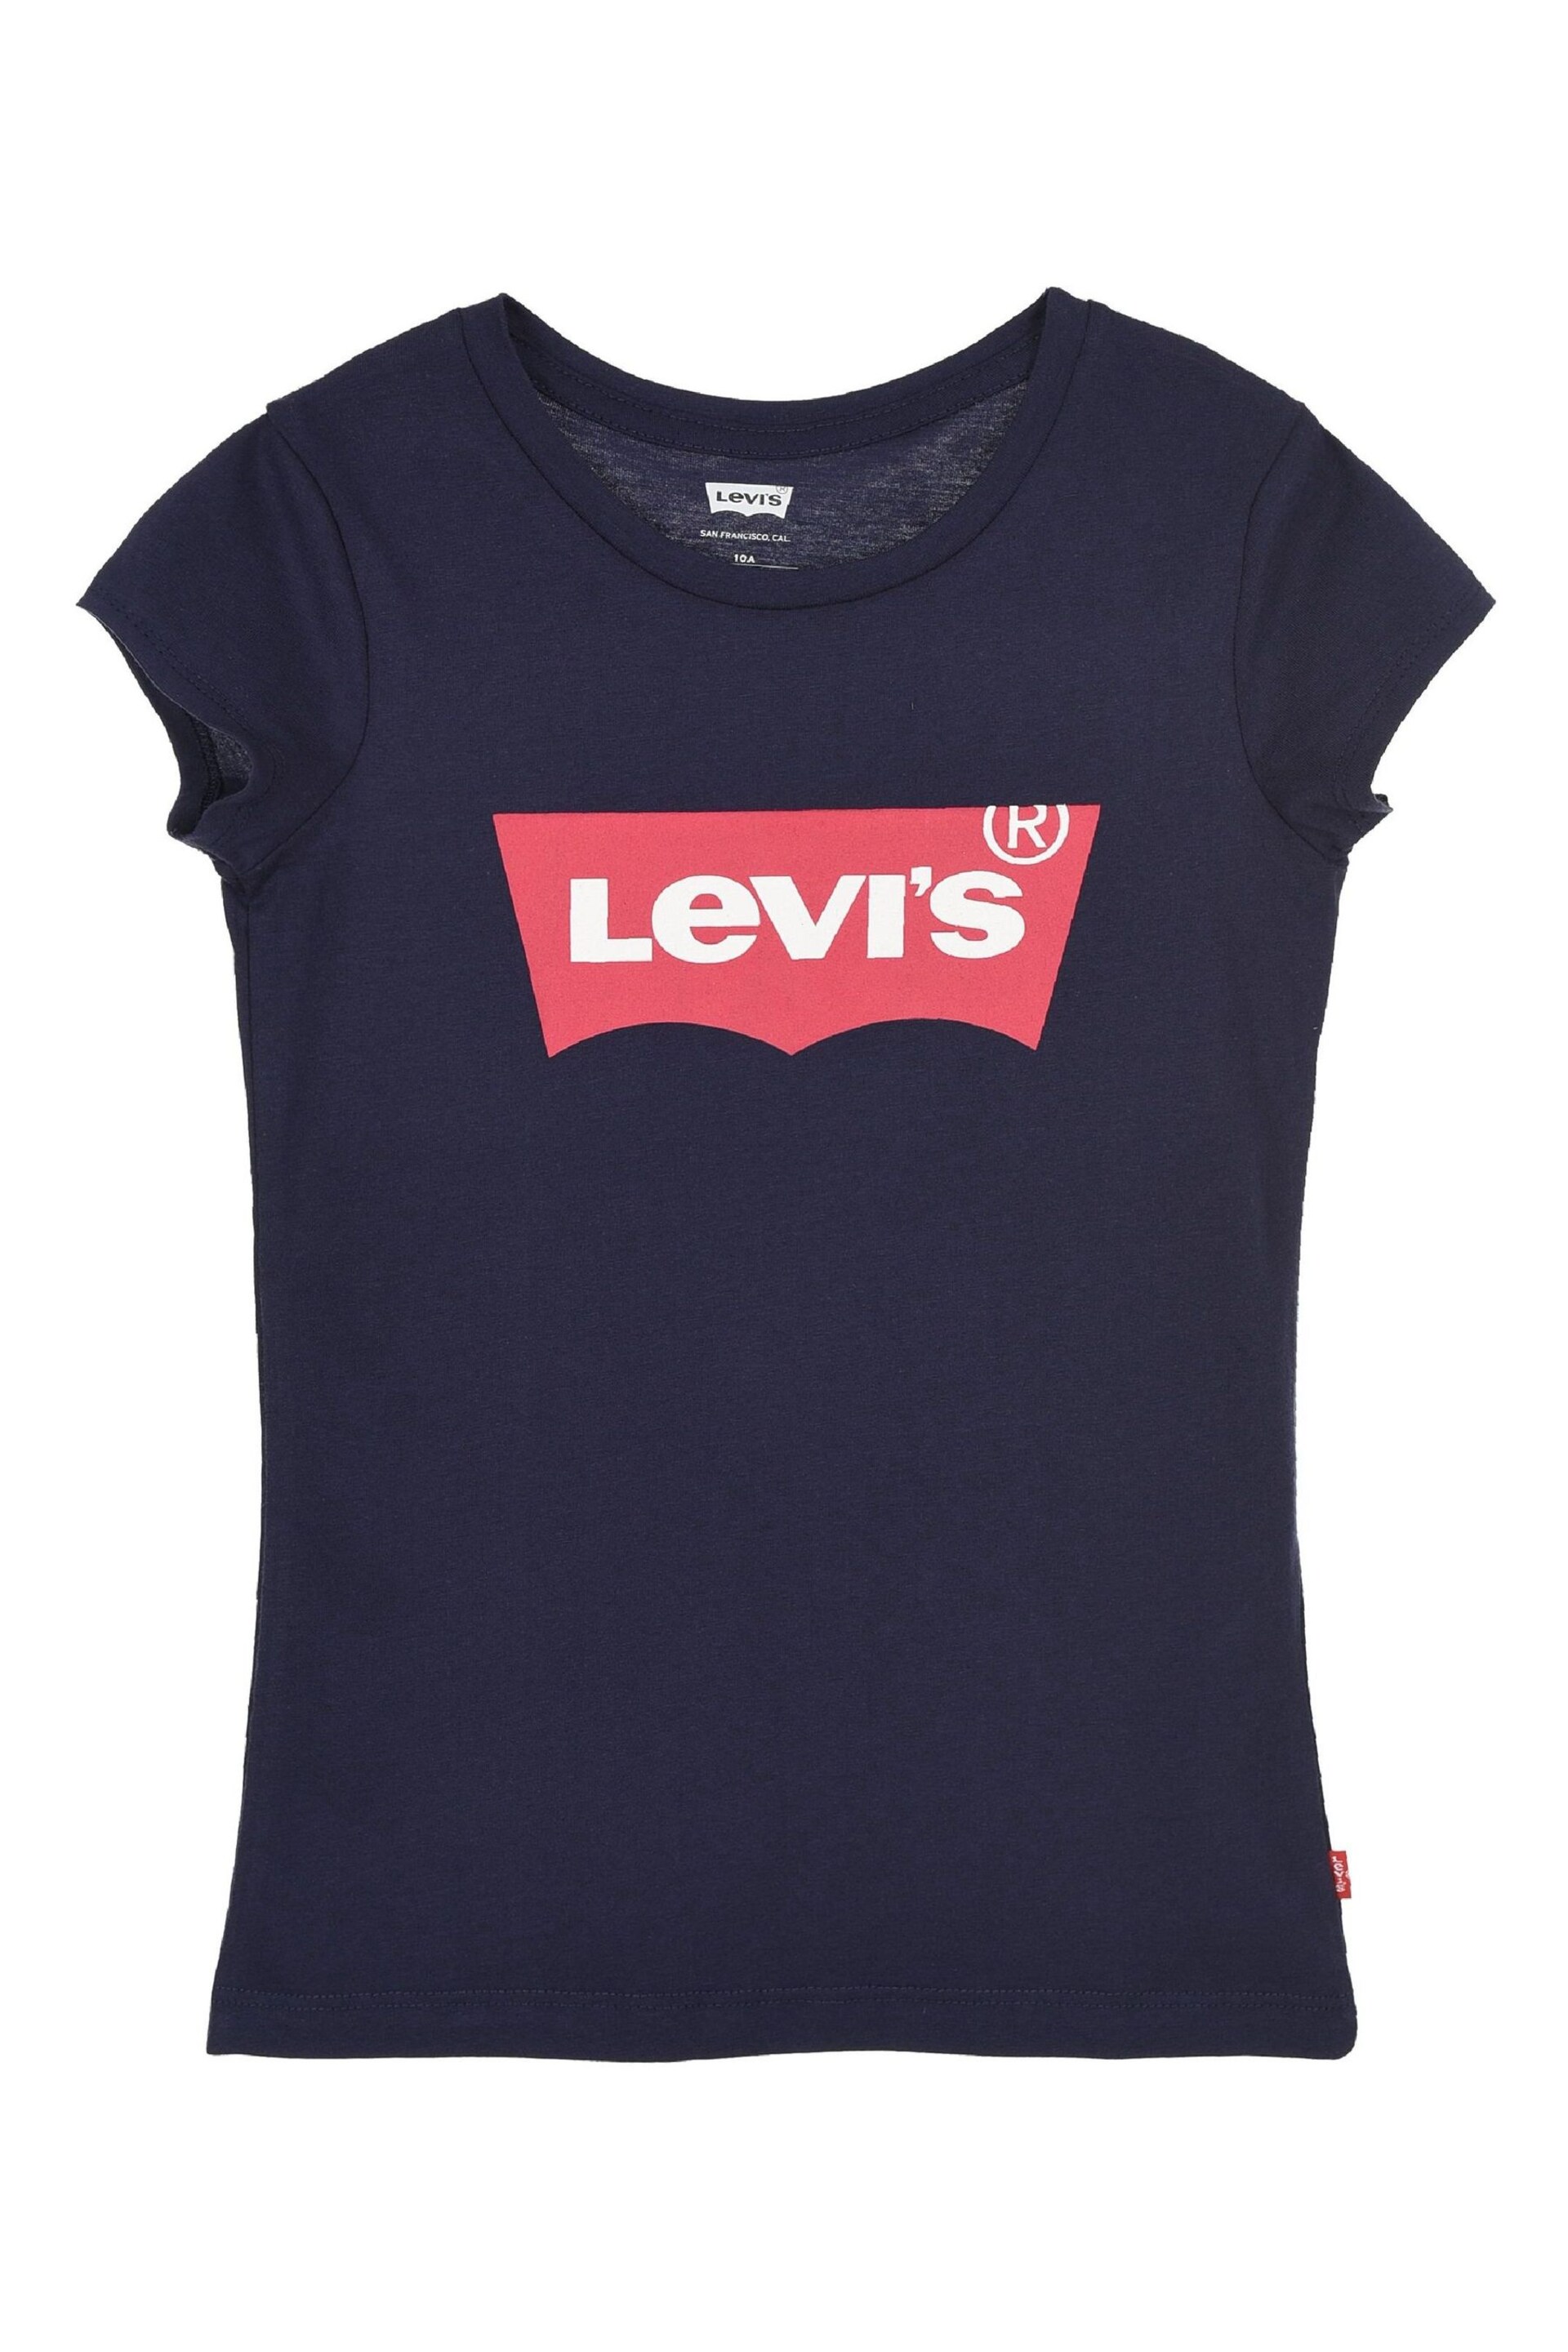 Levi's® Navy Blue Batwing Girls T-Shirt - Image 3 of 4